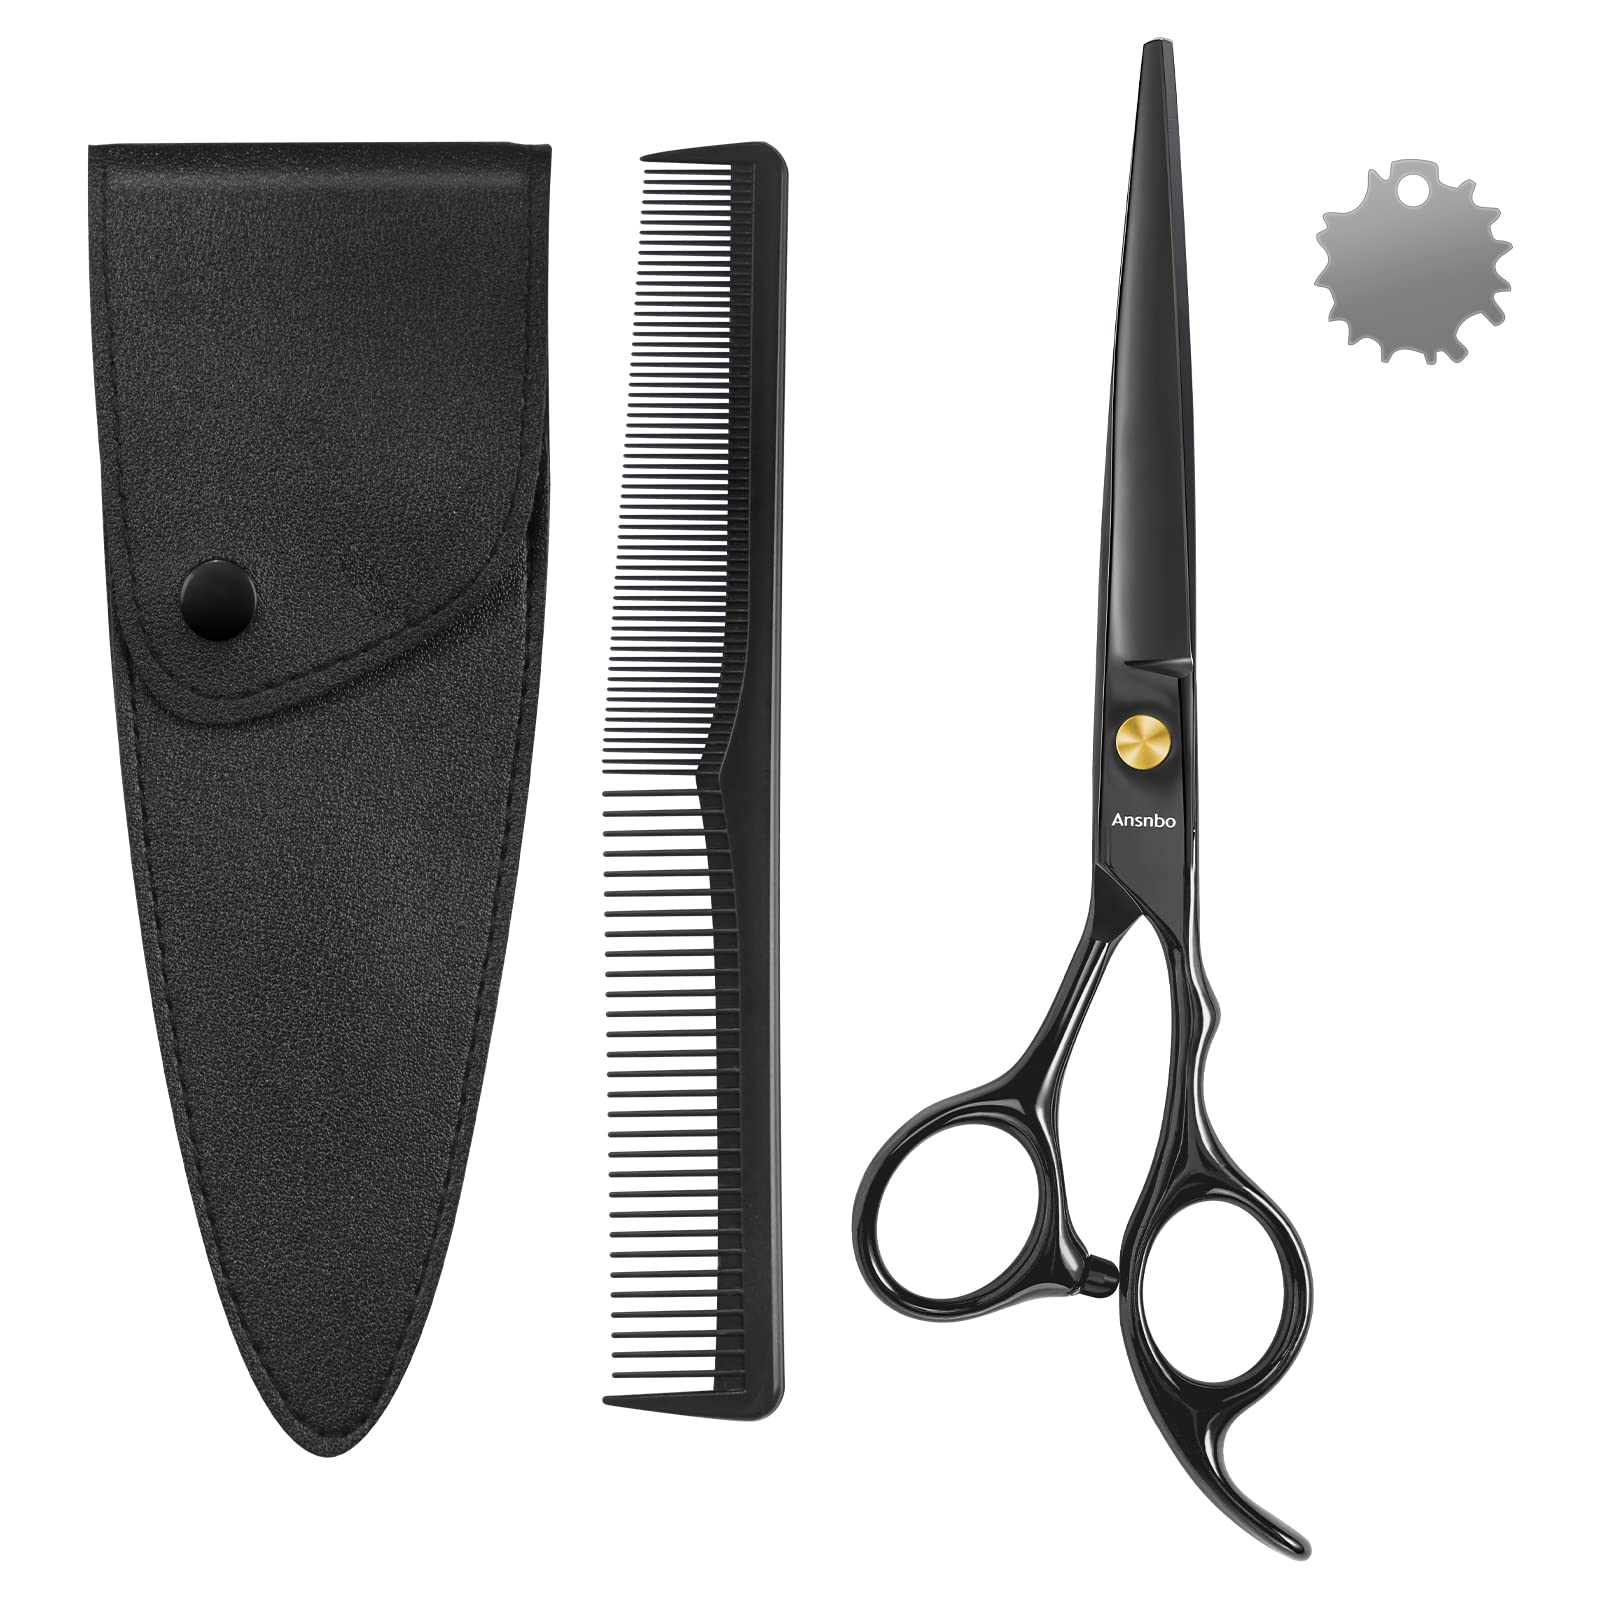 Ansnbo Professional Hair Cutting Scissors, 6 Inch Premium